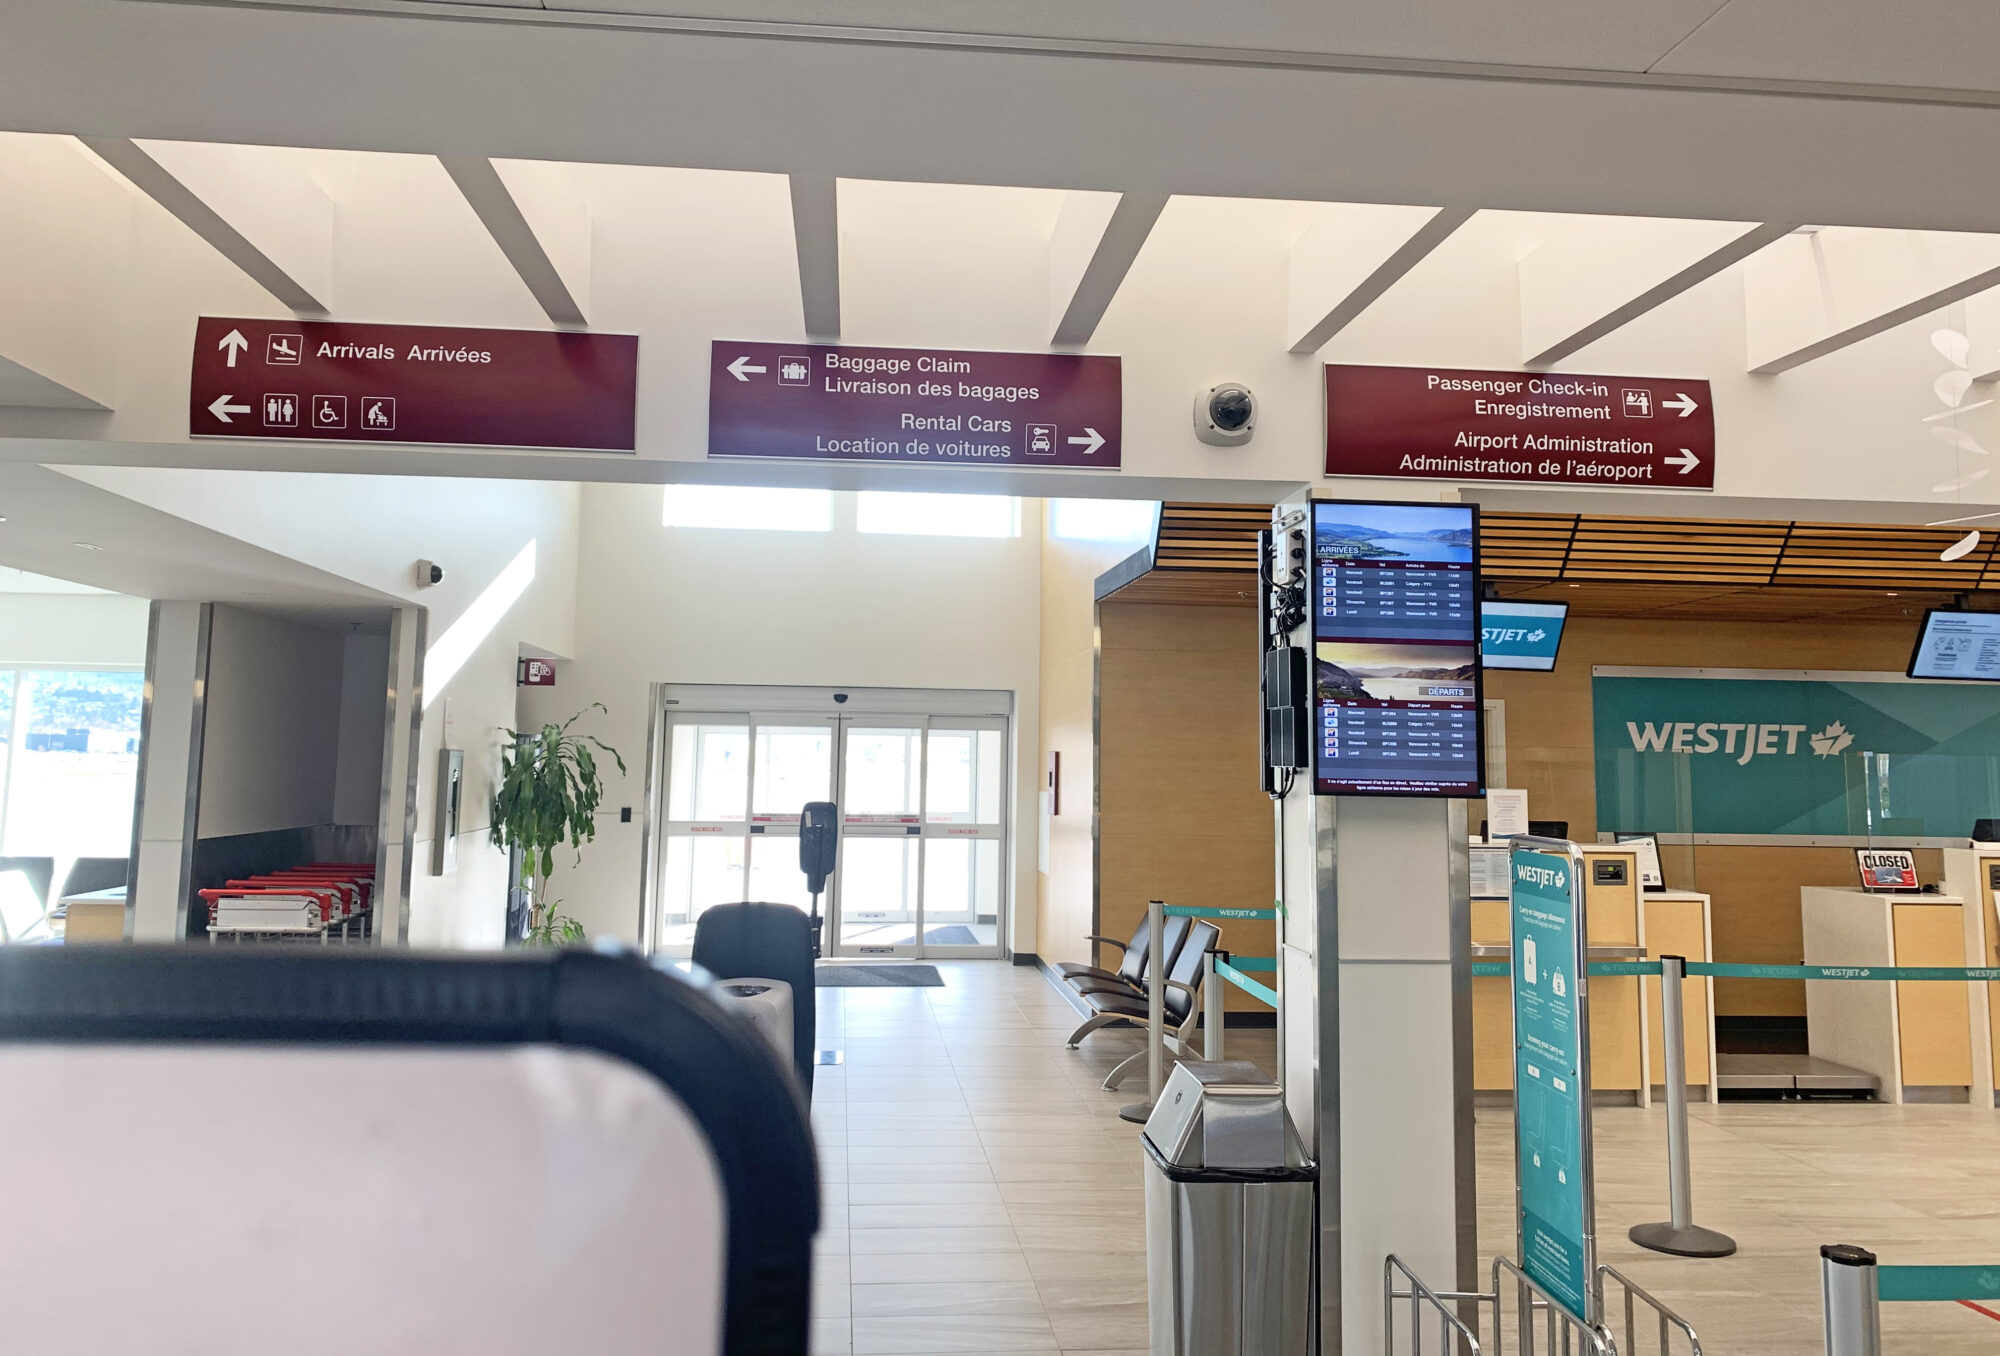 Penticton Airport - Internal Wayfinding and Flight Information Displays